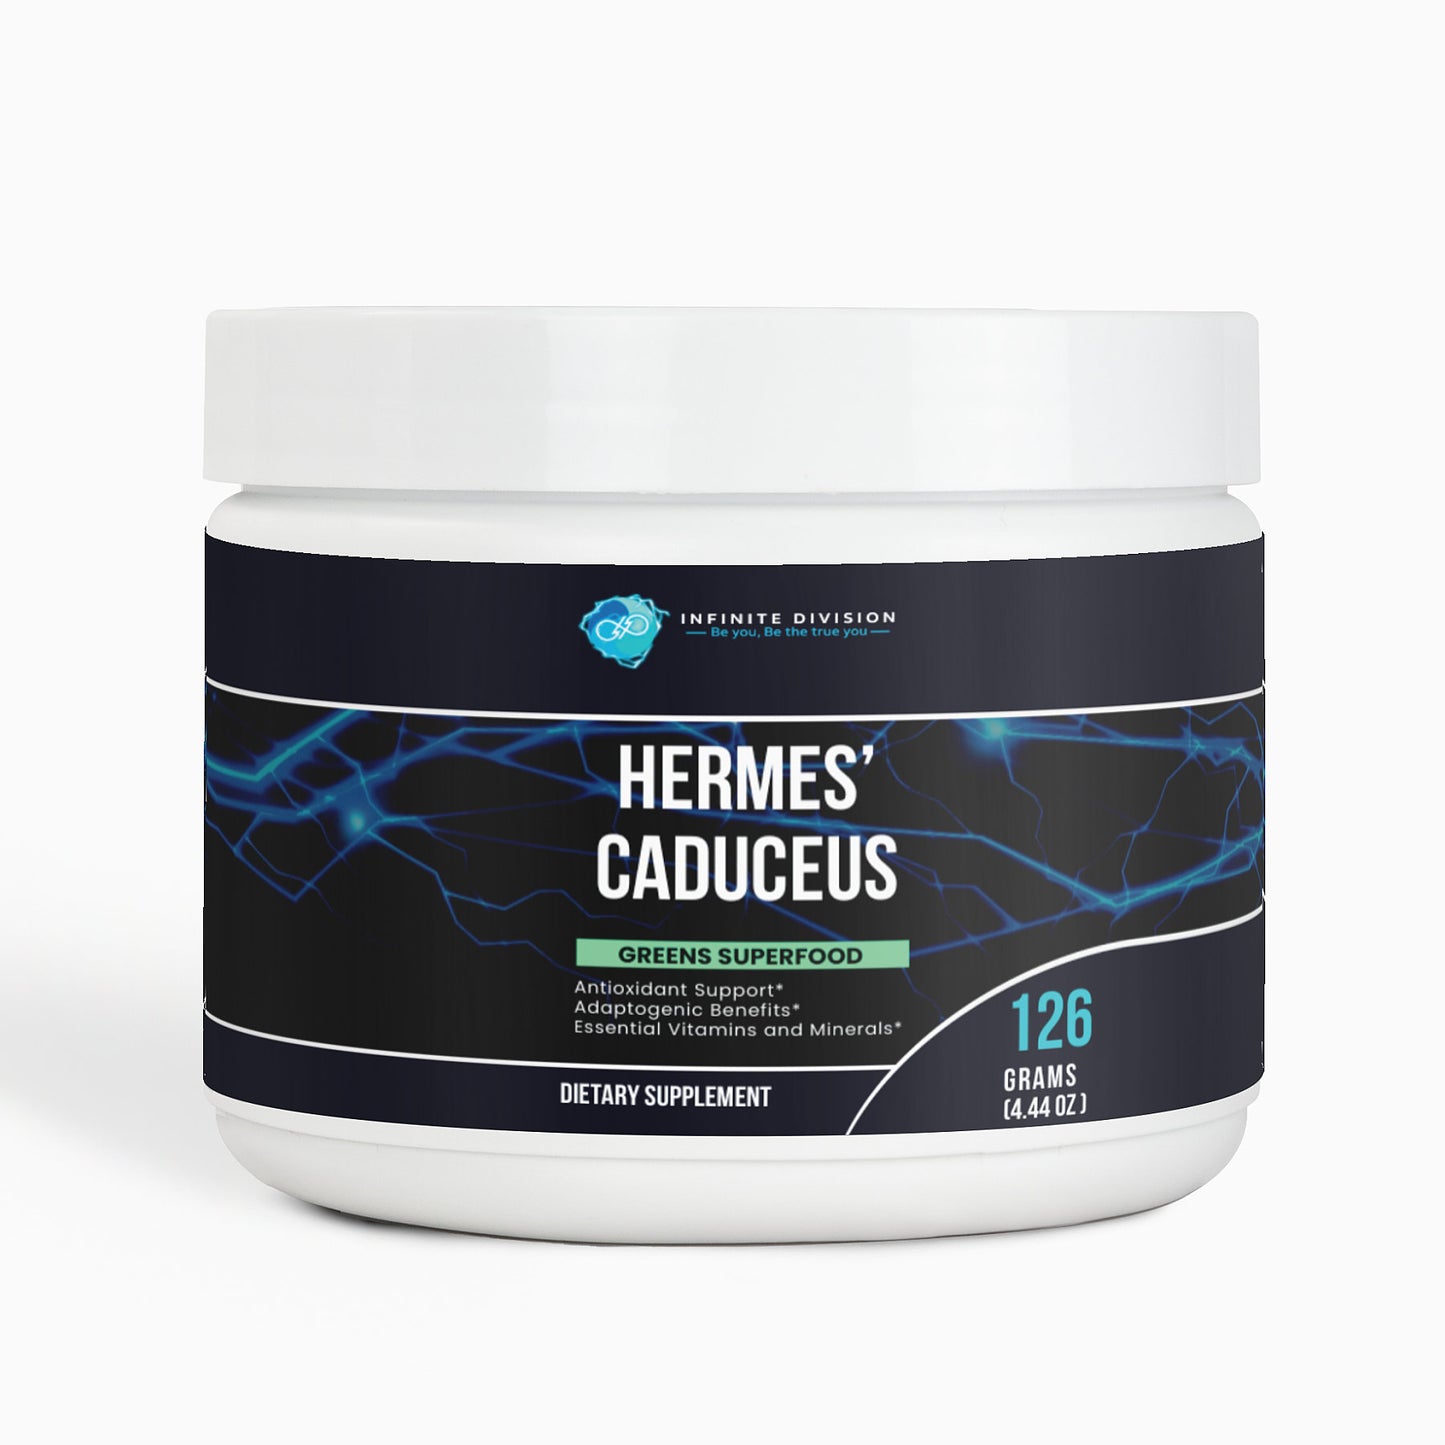 Hermes' Caduceus - Greens Superfood